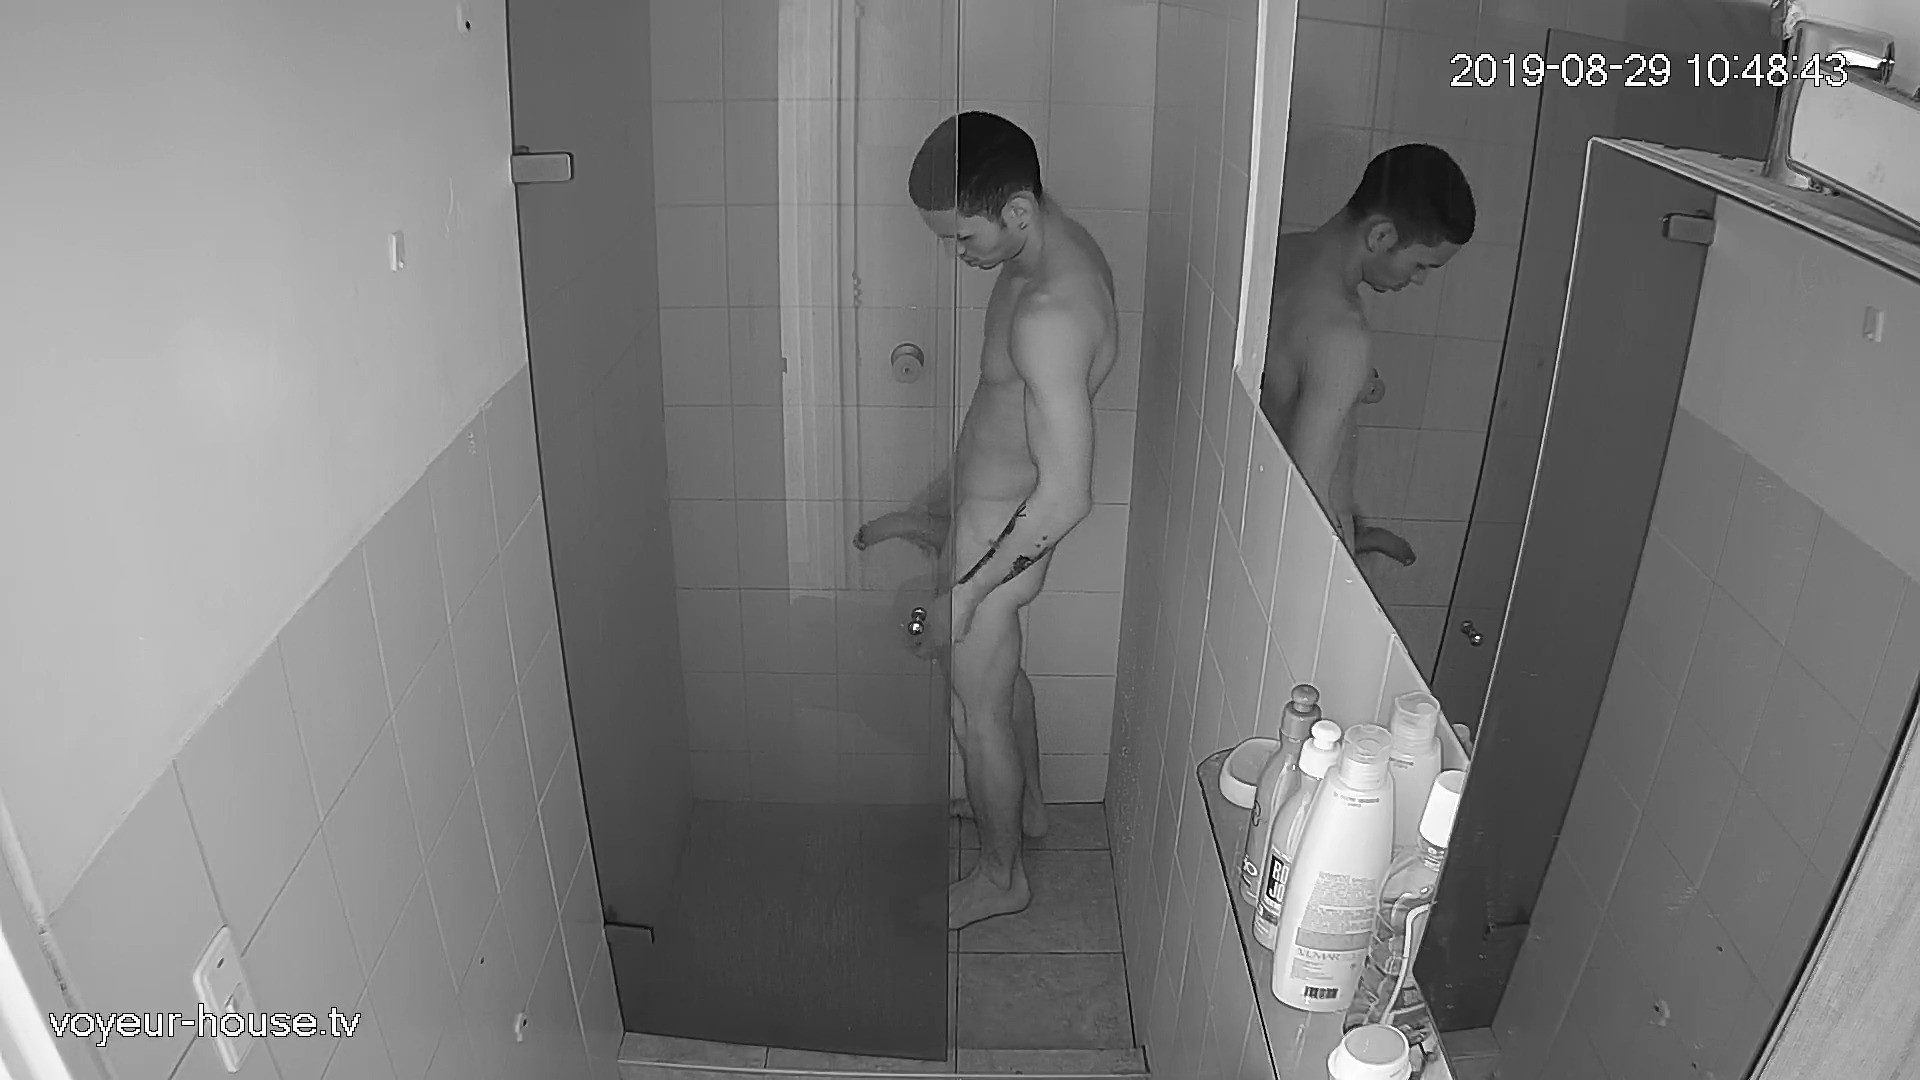 Peter Jerking In Shower 29 Aug 2019